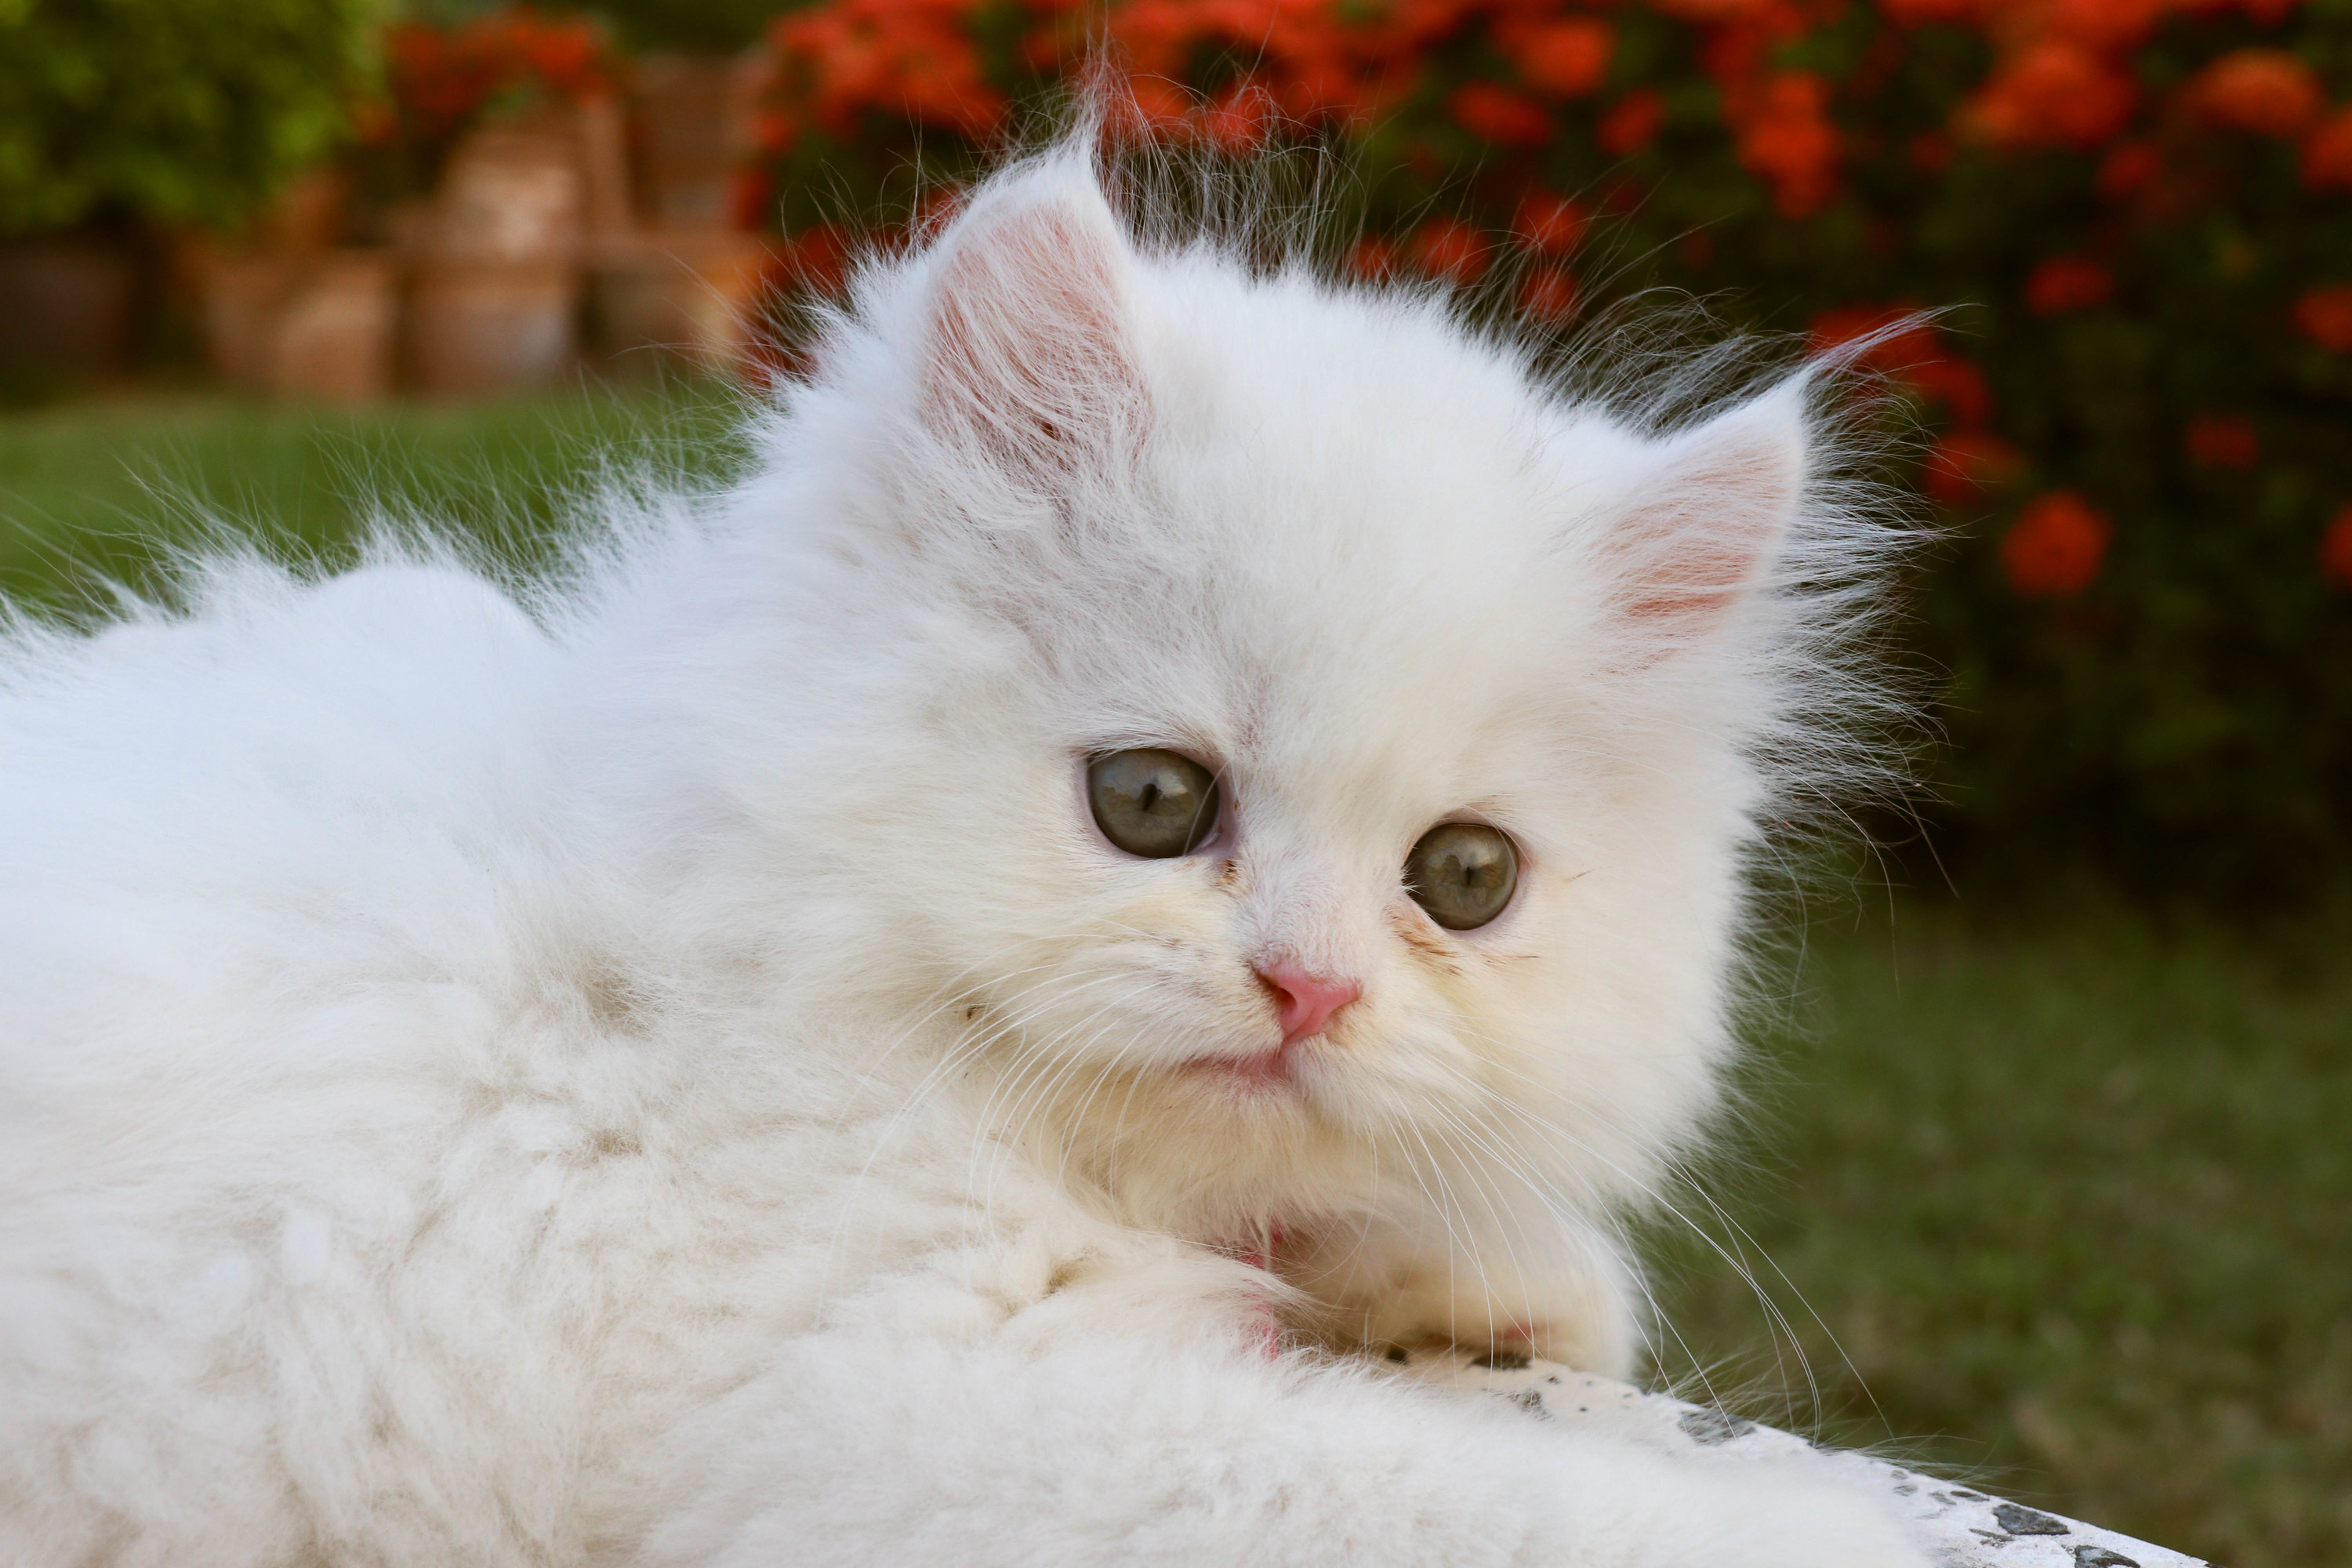 A white Persian cat